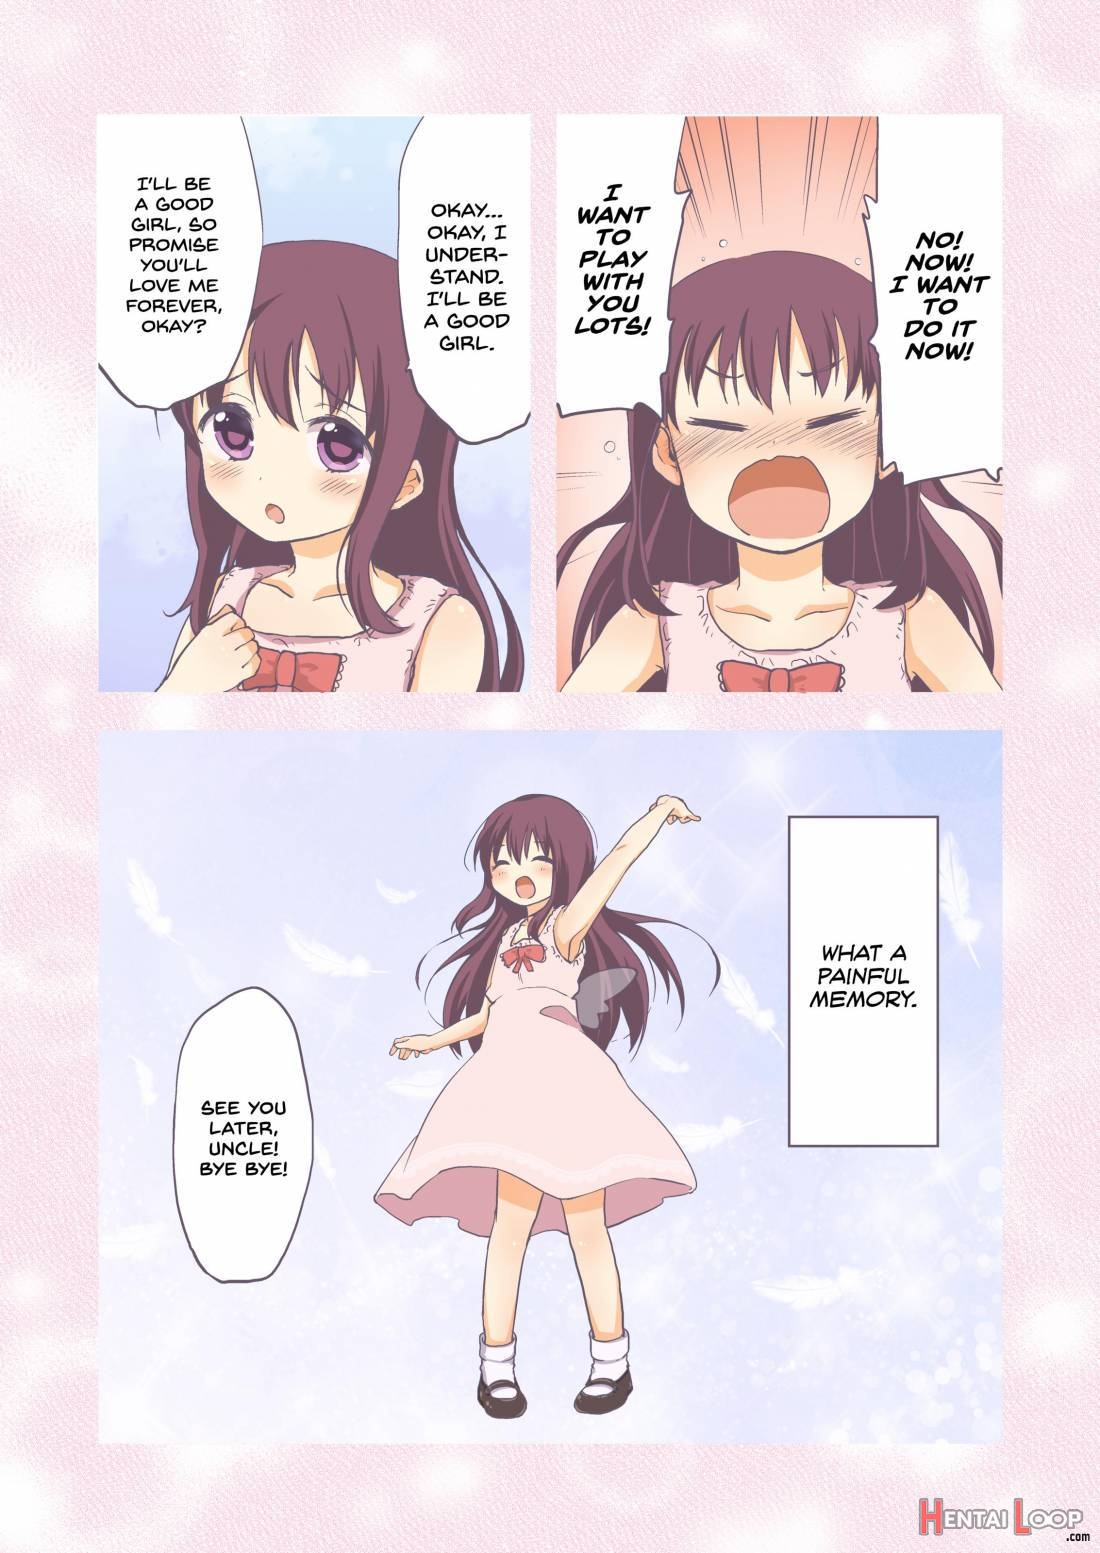 Chii-chan Kaihatsu Nikki Color Ban page 5